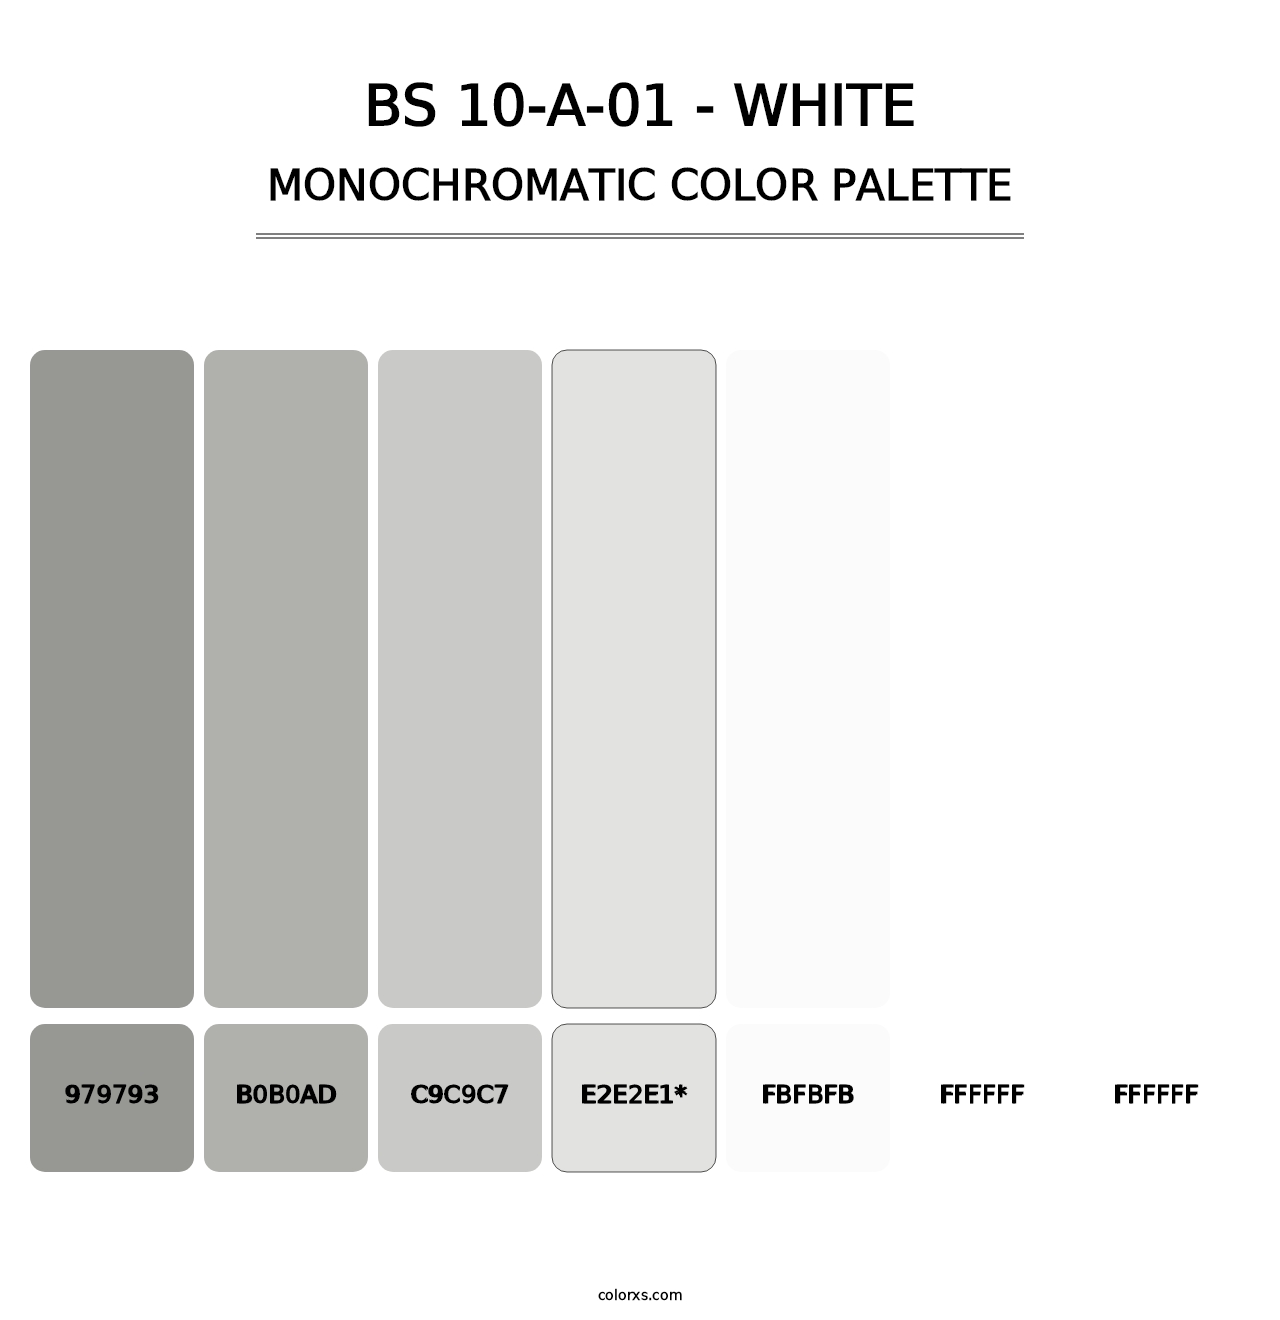 BS 10-A-01 - White - Monochromatic Color Palette